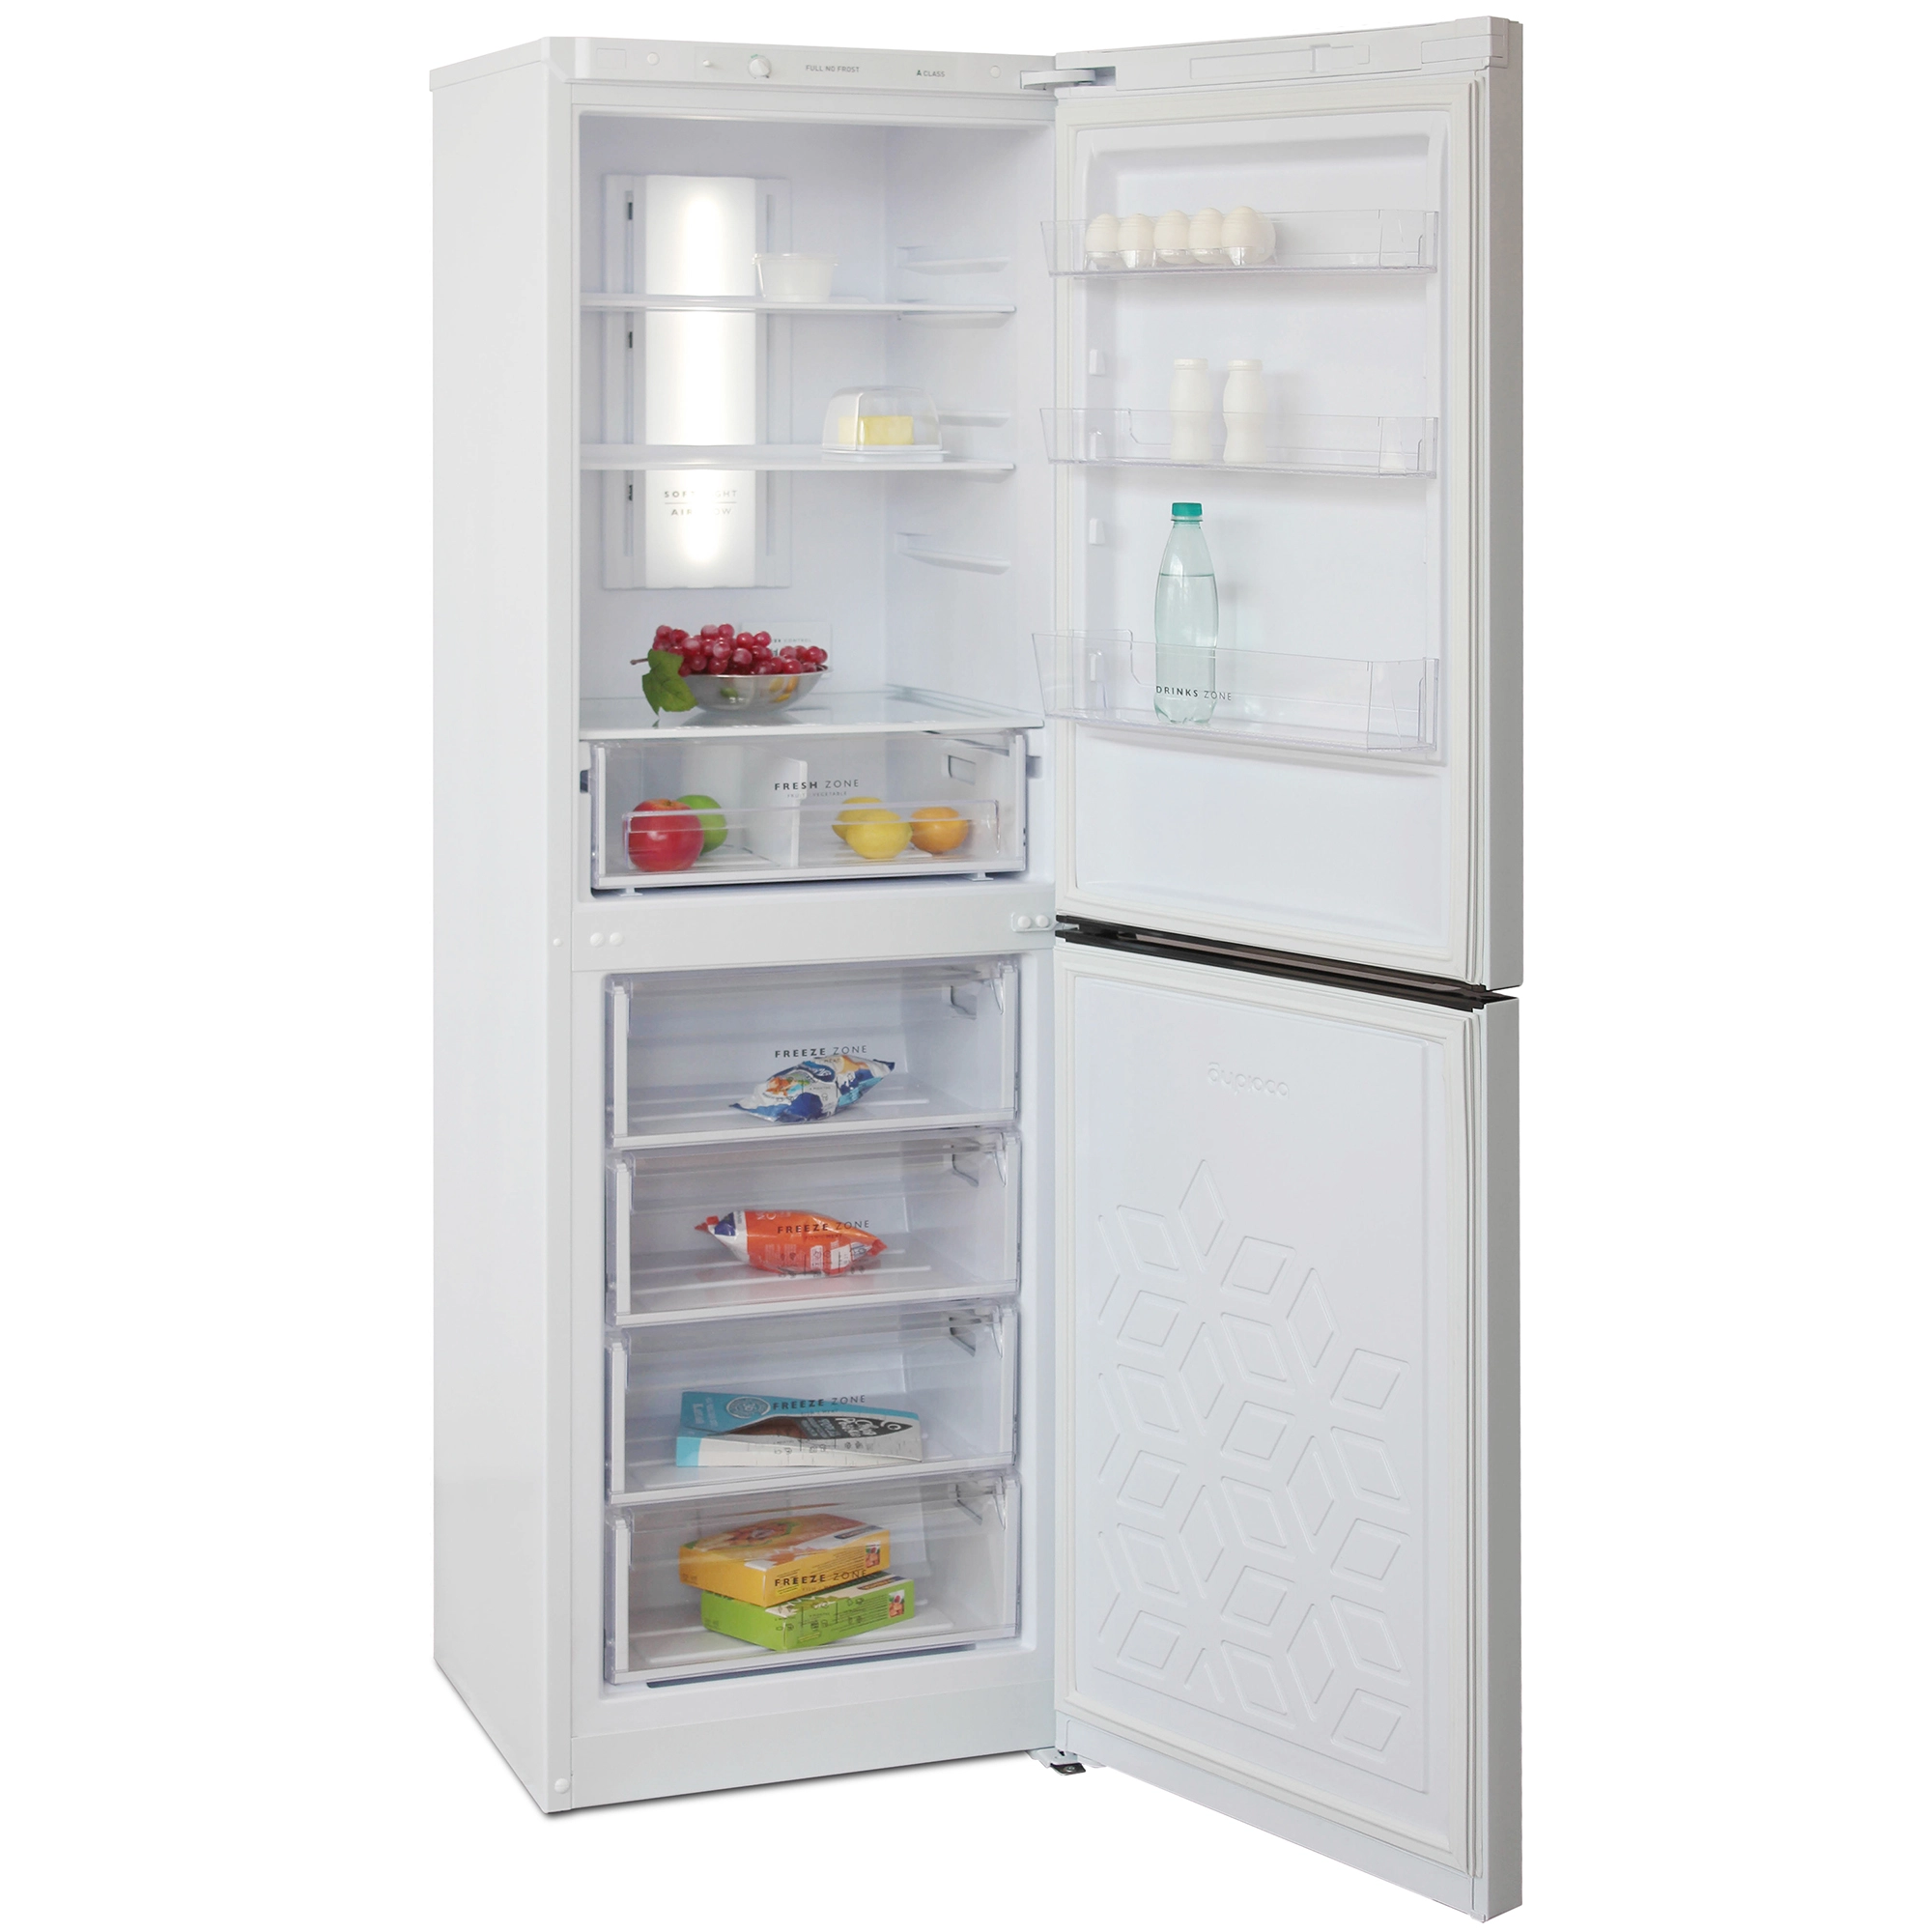 Бирюса 380nf. Холодильник Бирюса g380nf. Холодильник Бирюса 380nf. Холодильник Бирюса g320nf. Холодильник Бирюса w840nf.